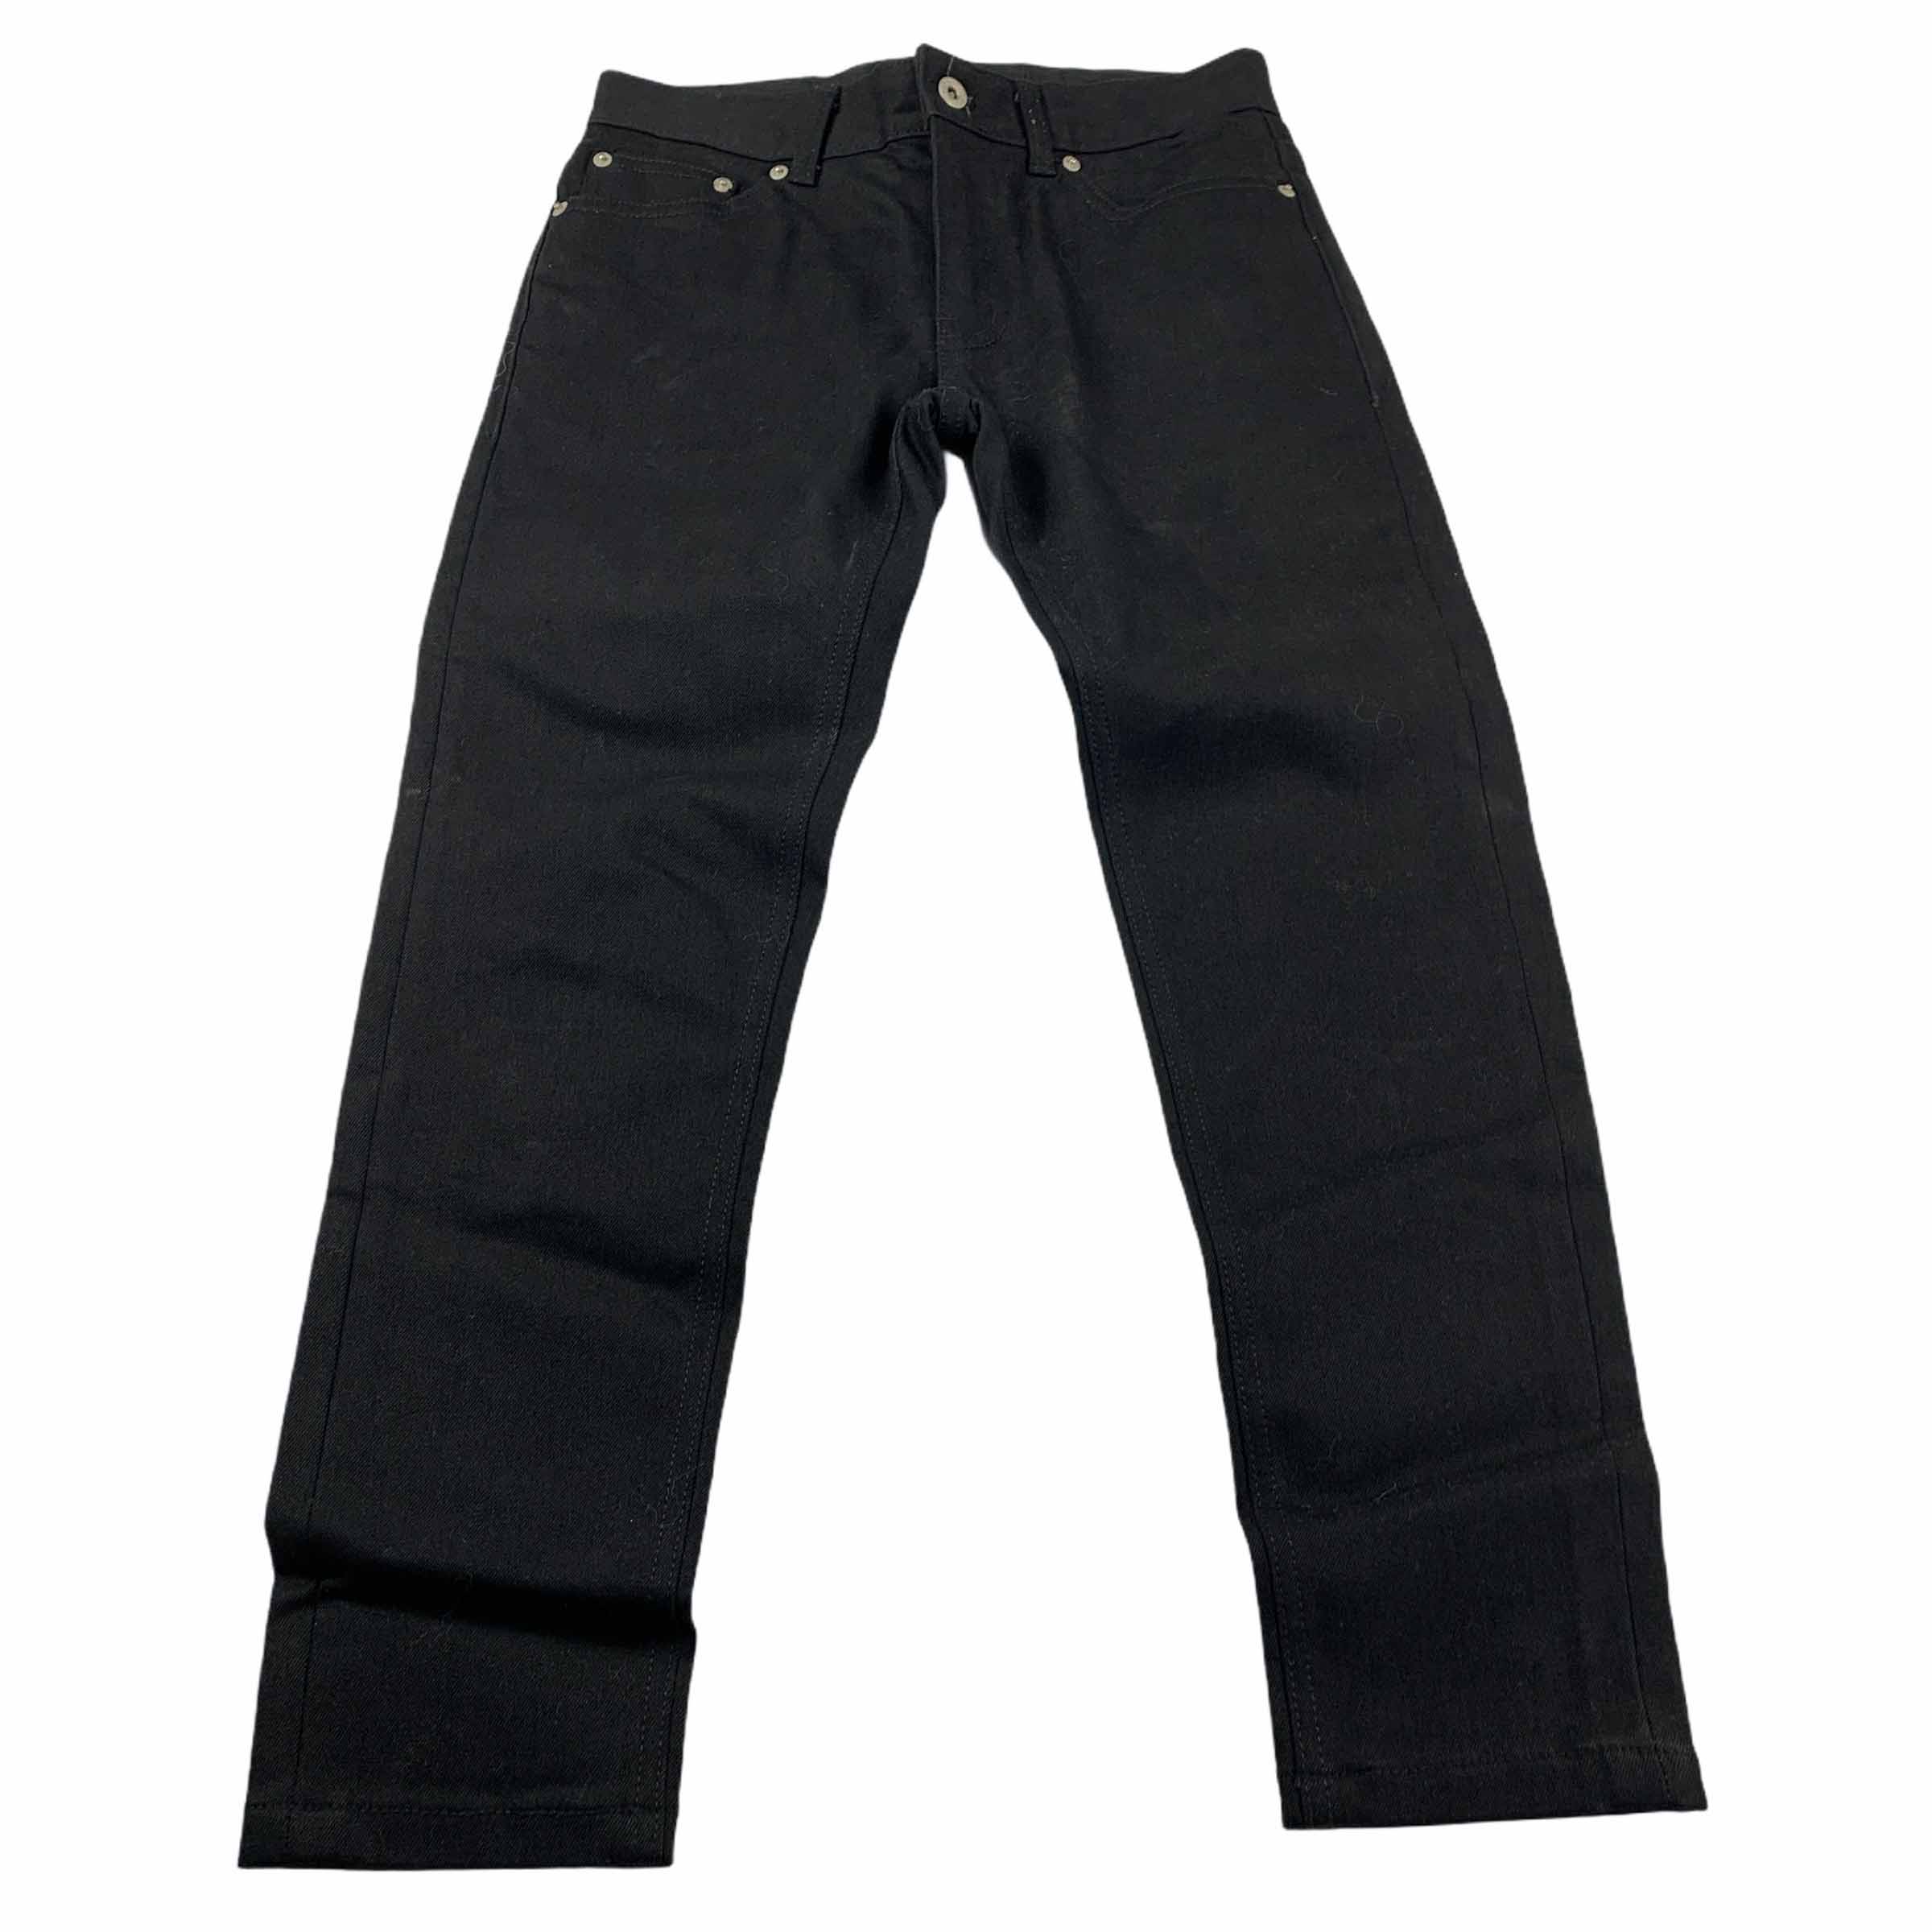 [Modified] Skinny Pants BK - Size 29/30